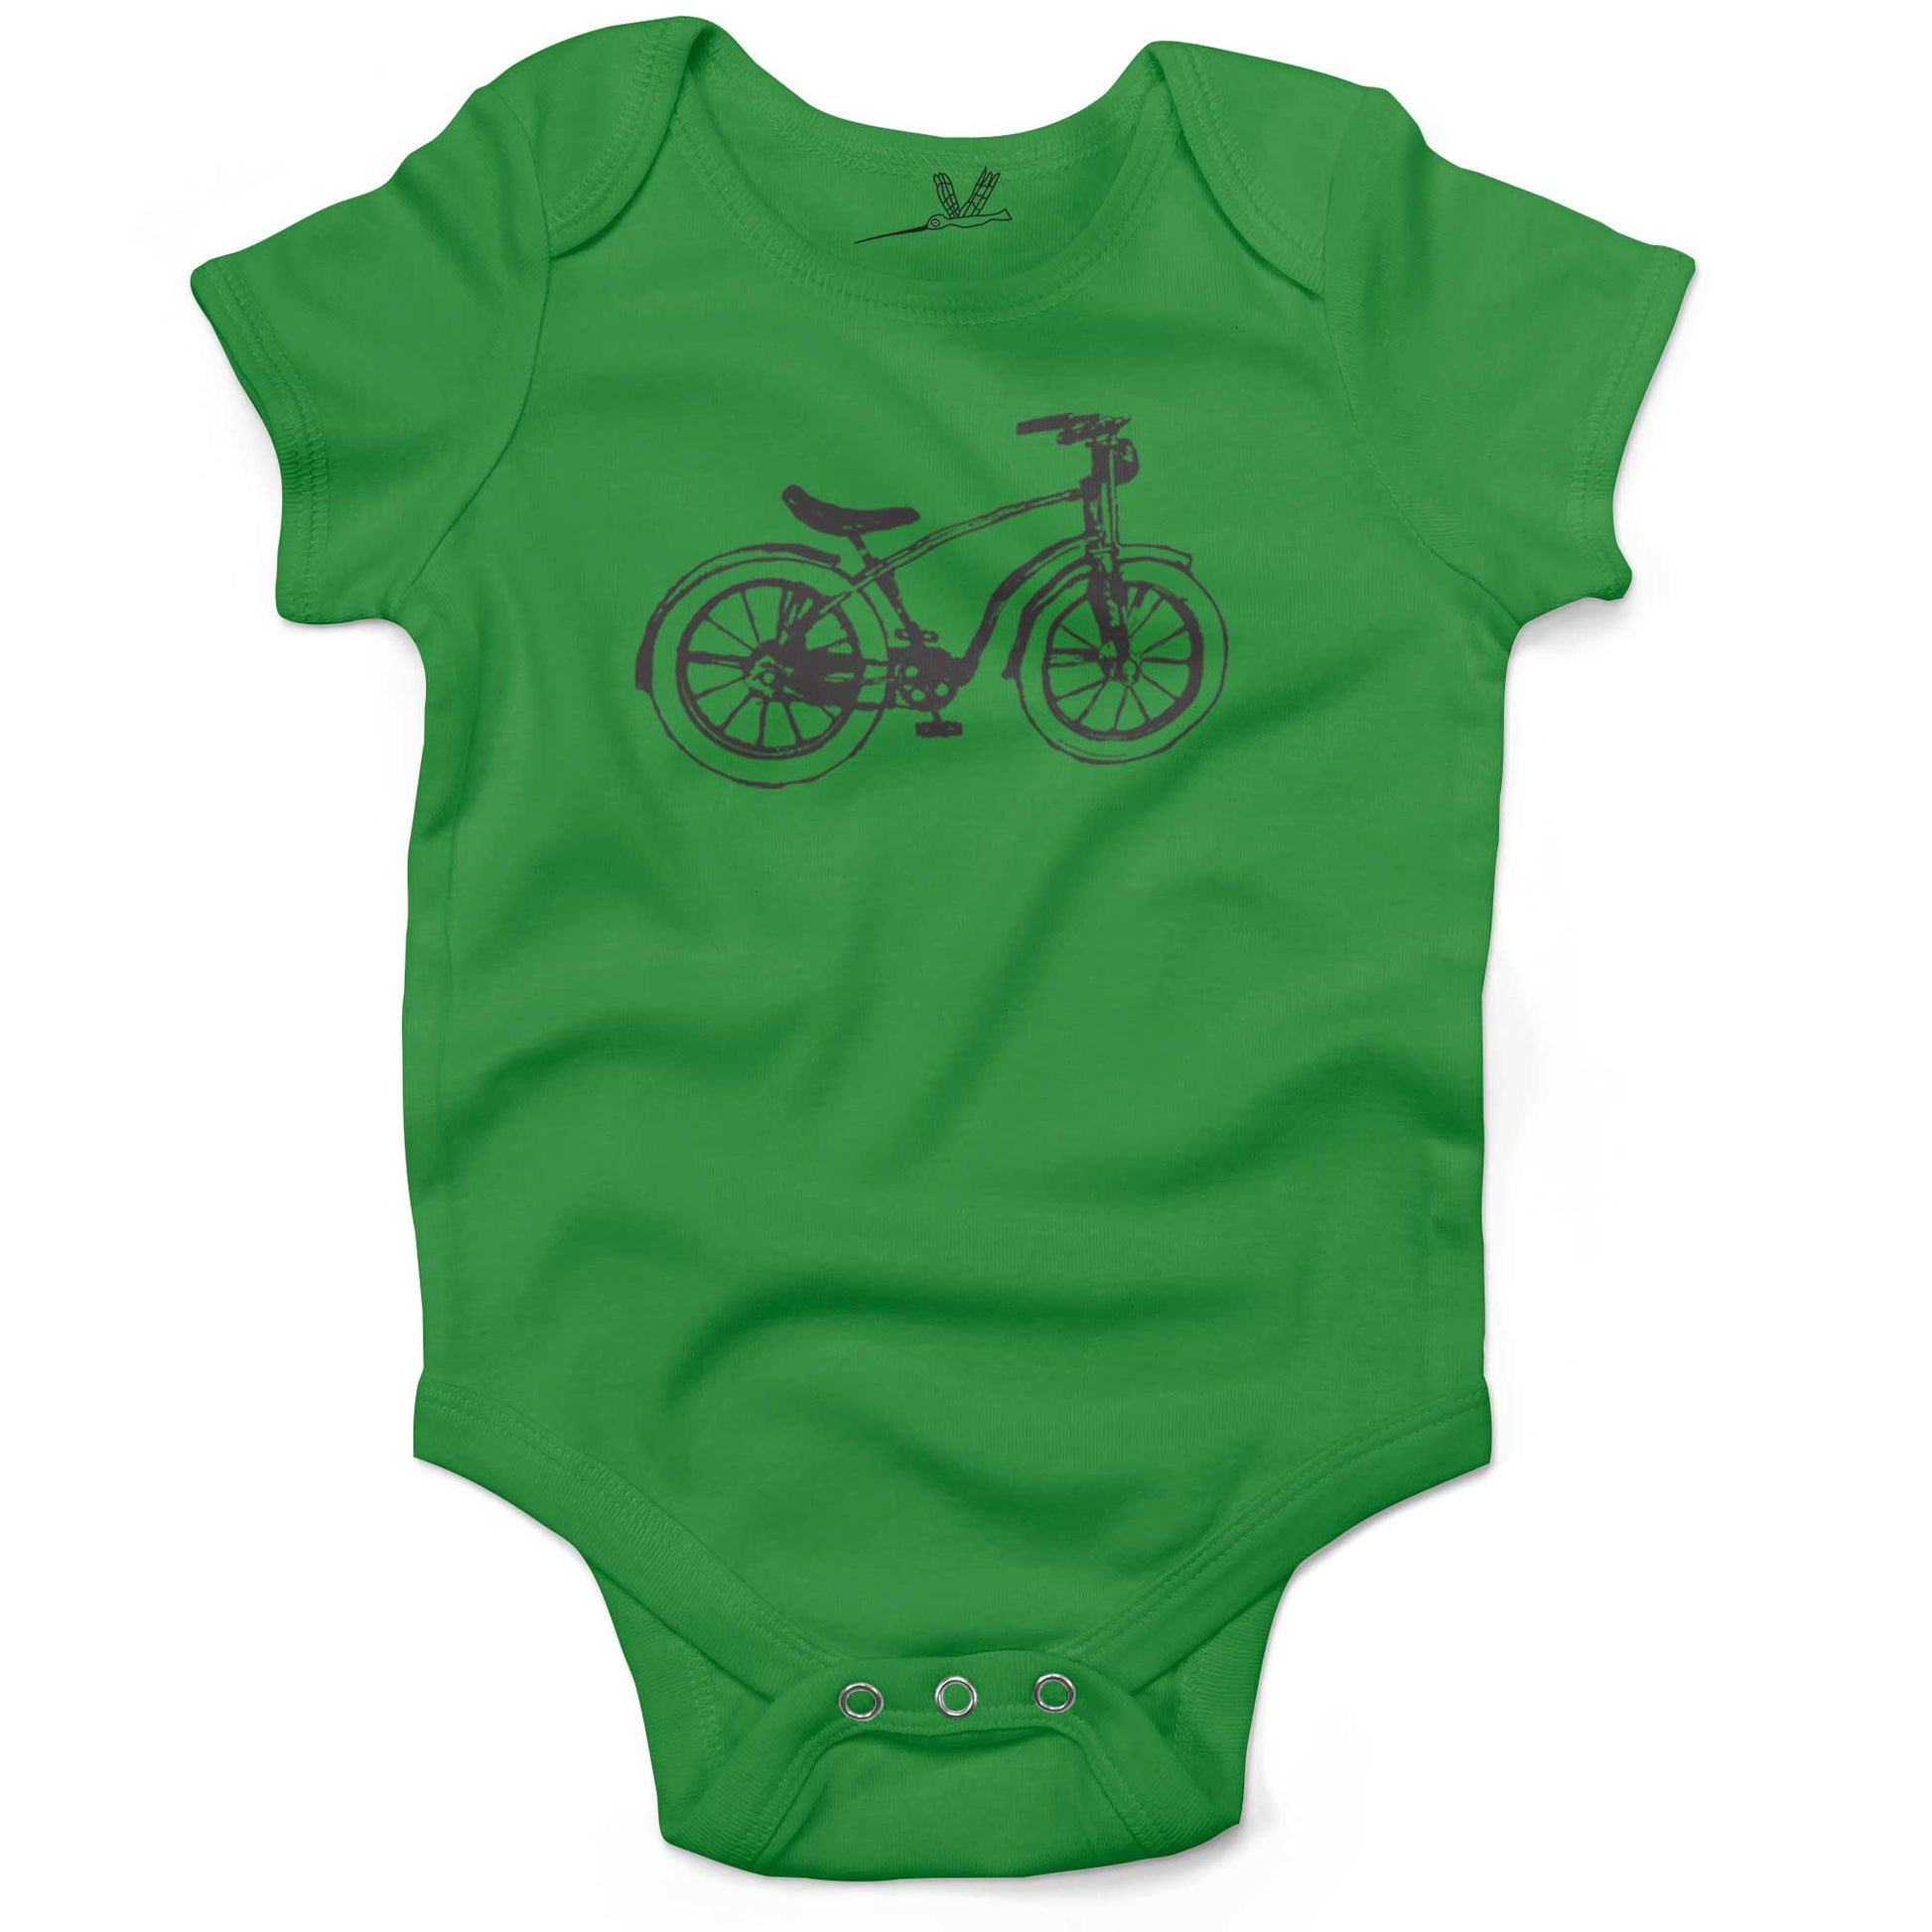 Vintage Bike Infant Bodysuit or Raglan Baby Tee-Grass Green-3-6 months